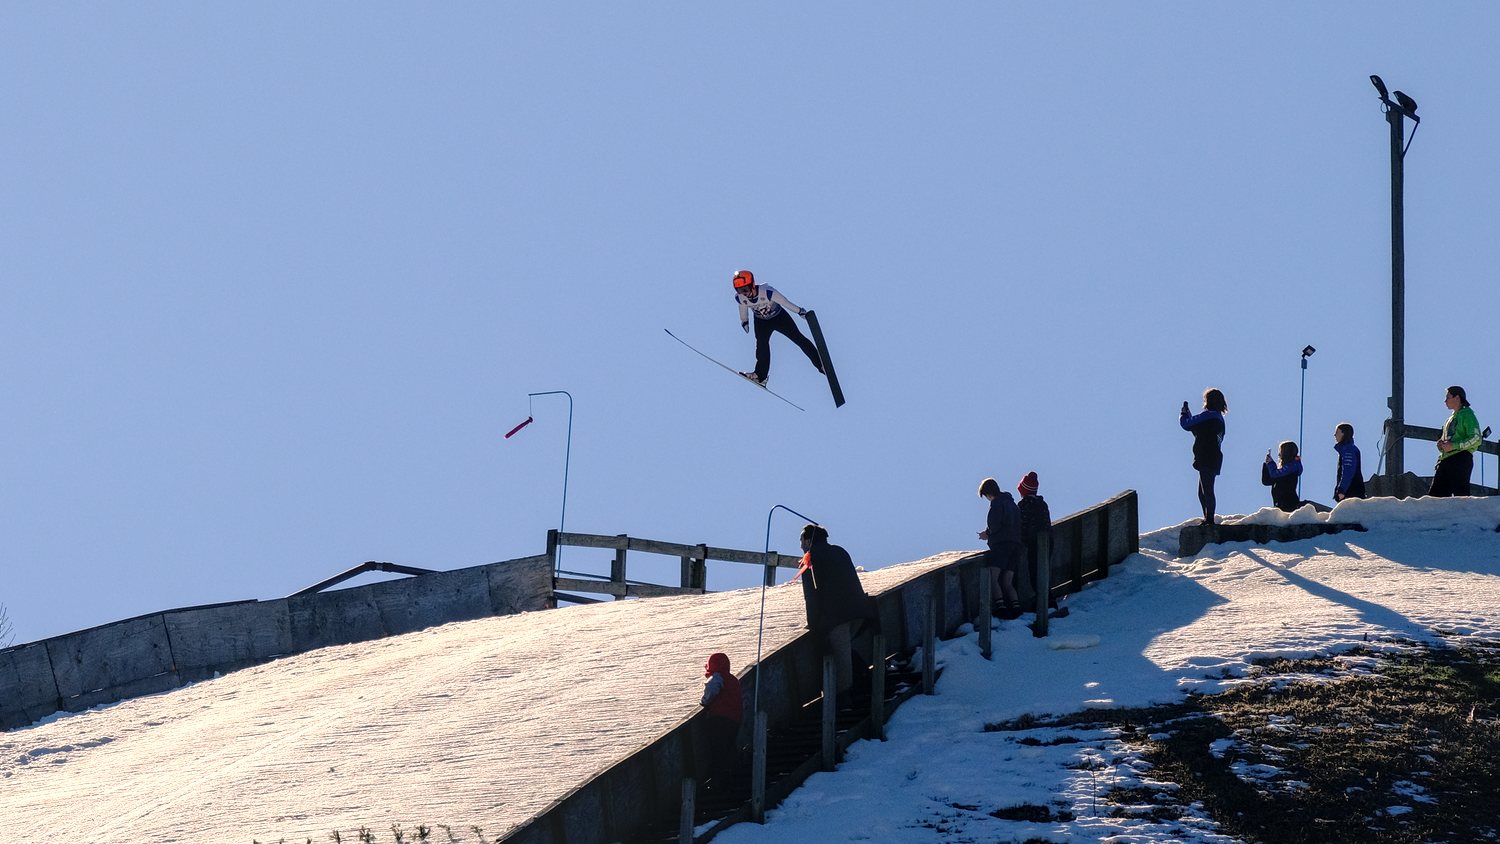 Ski jumper at the 118th Annual Norge Ski Club Winter Tournament.